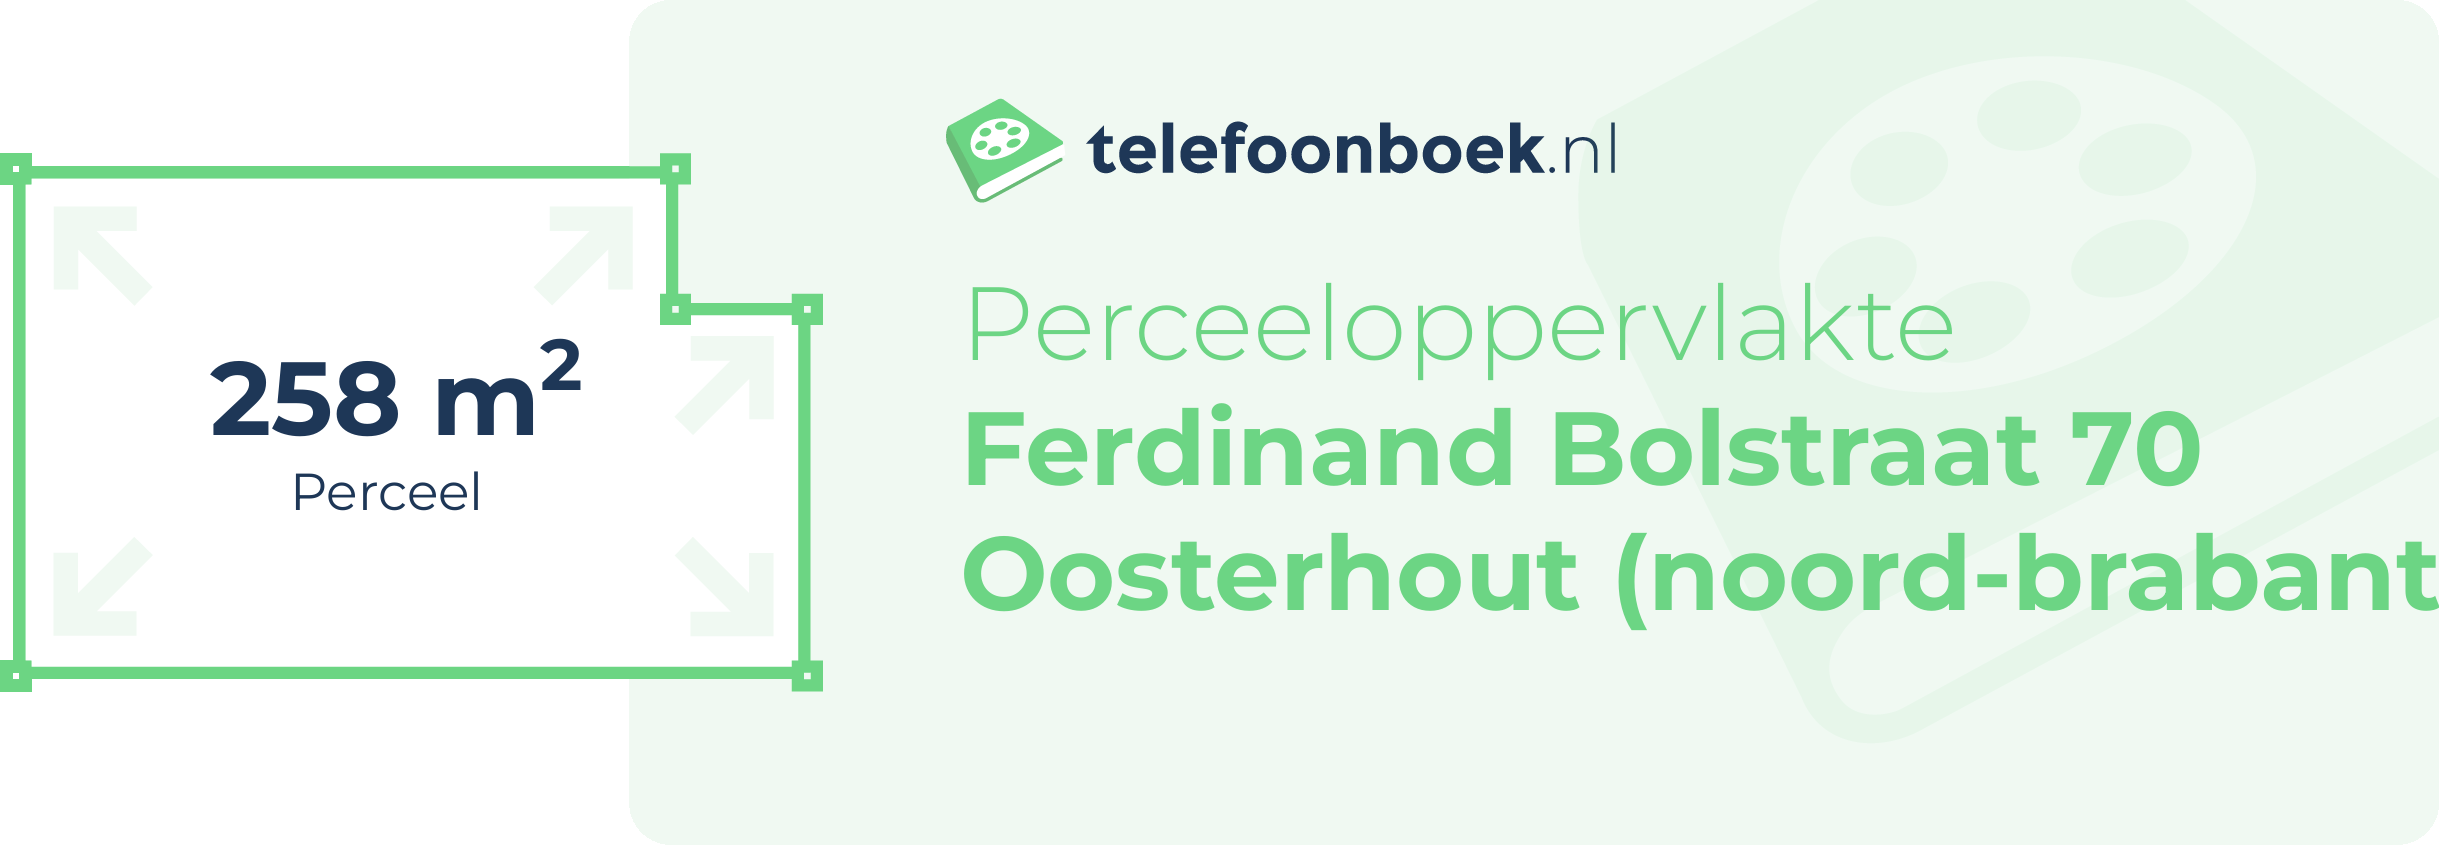 Perceeloppervlakte Ferdinand Bolstraat 70 Oosterhout (Noord-Brabant)